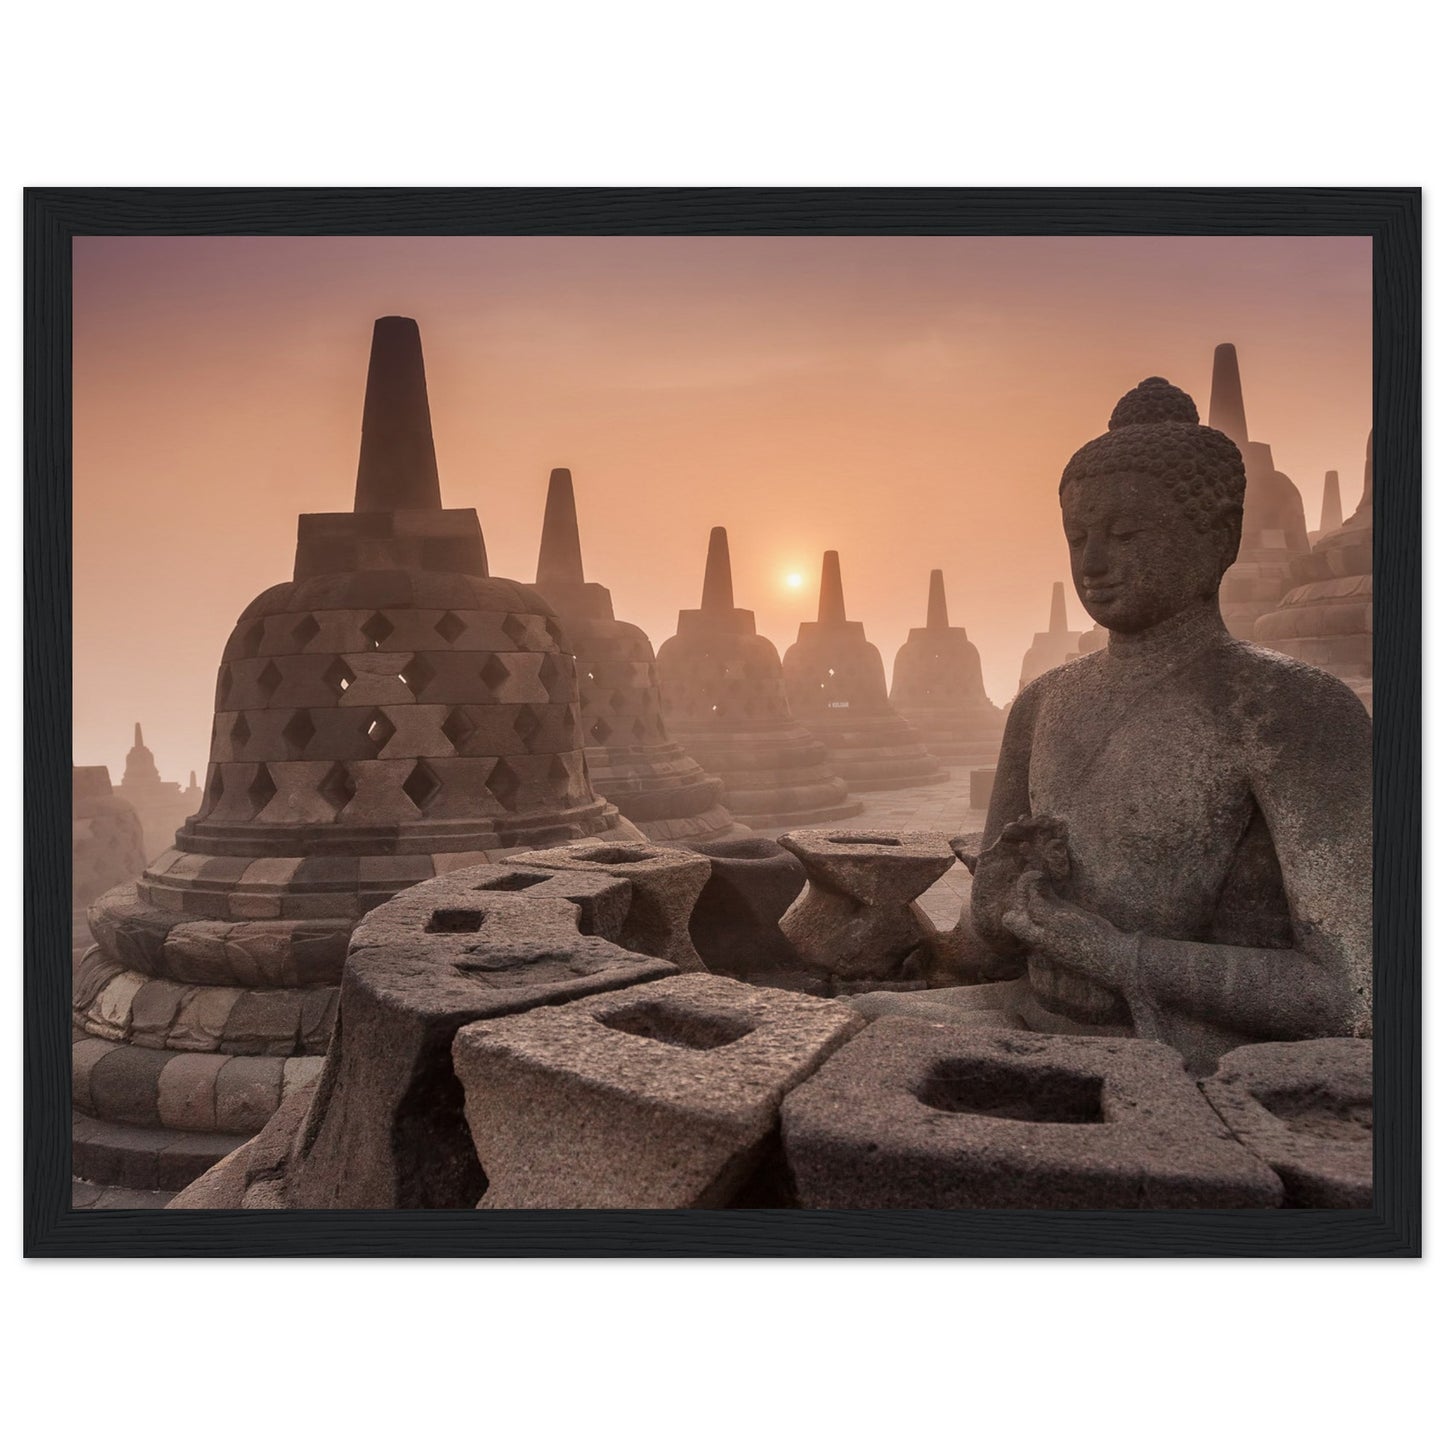 Borobudur tempel